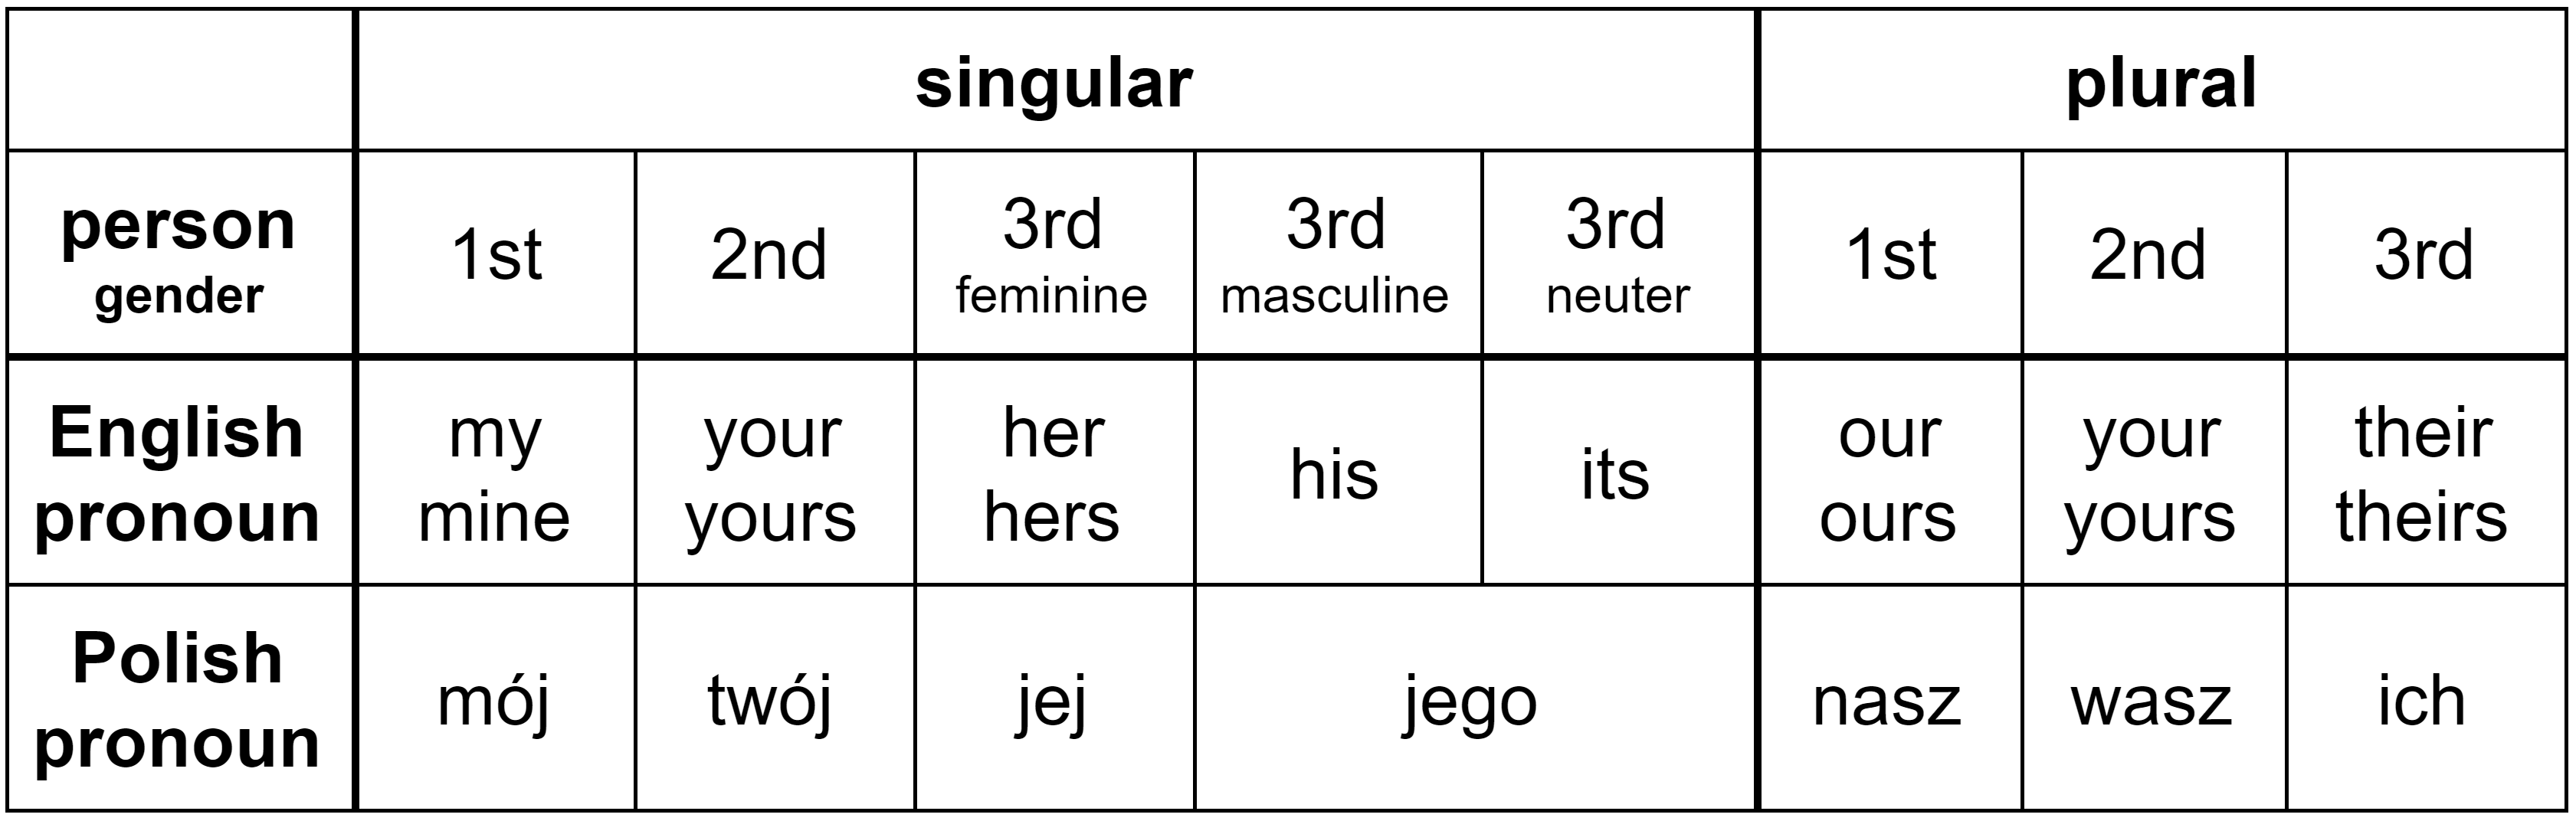 Pronoun chart with nominative forms of Polish possessive pronouns